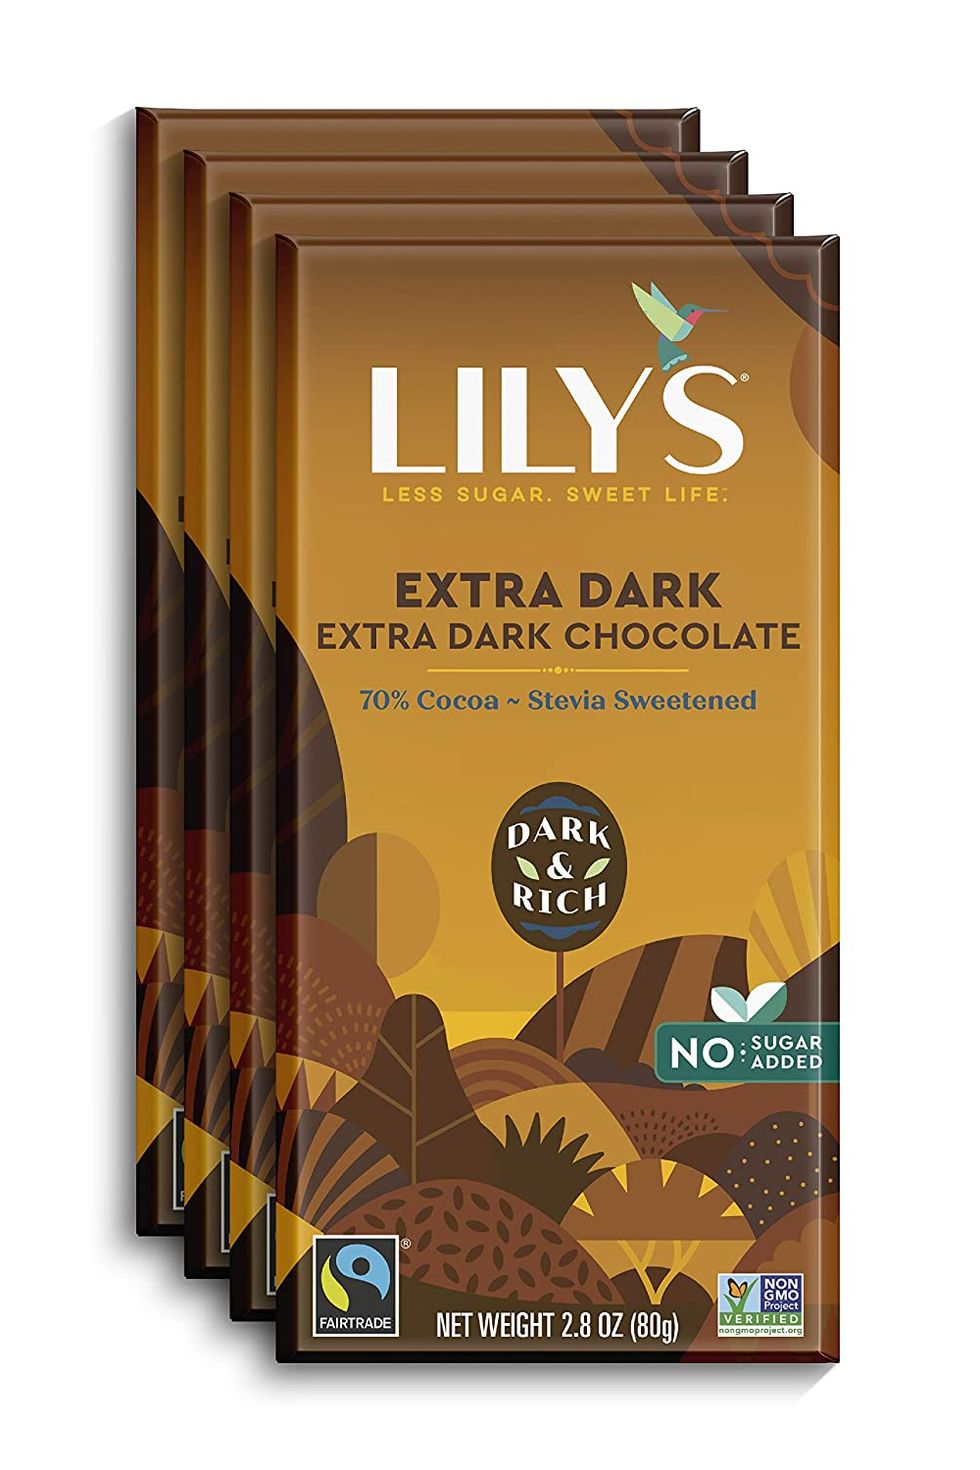 extra dark chocolate bar by lily's